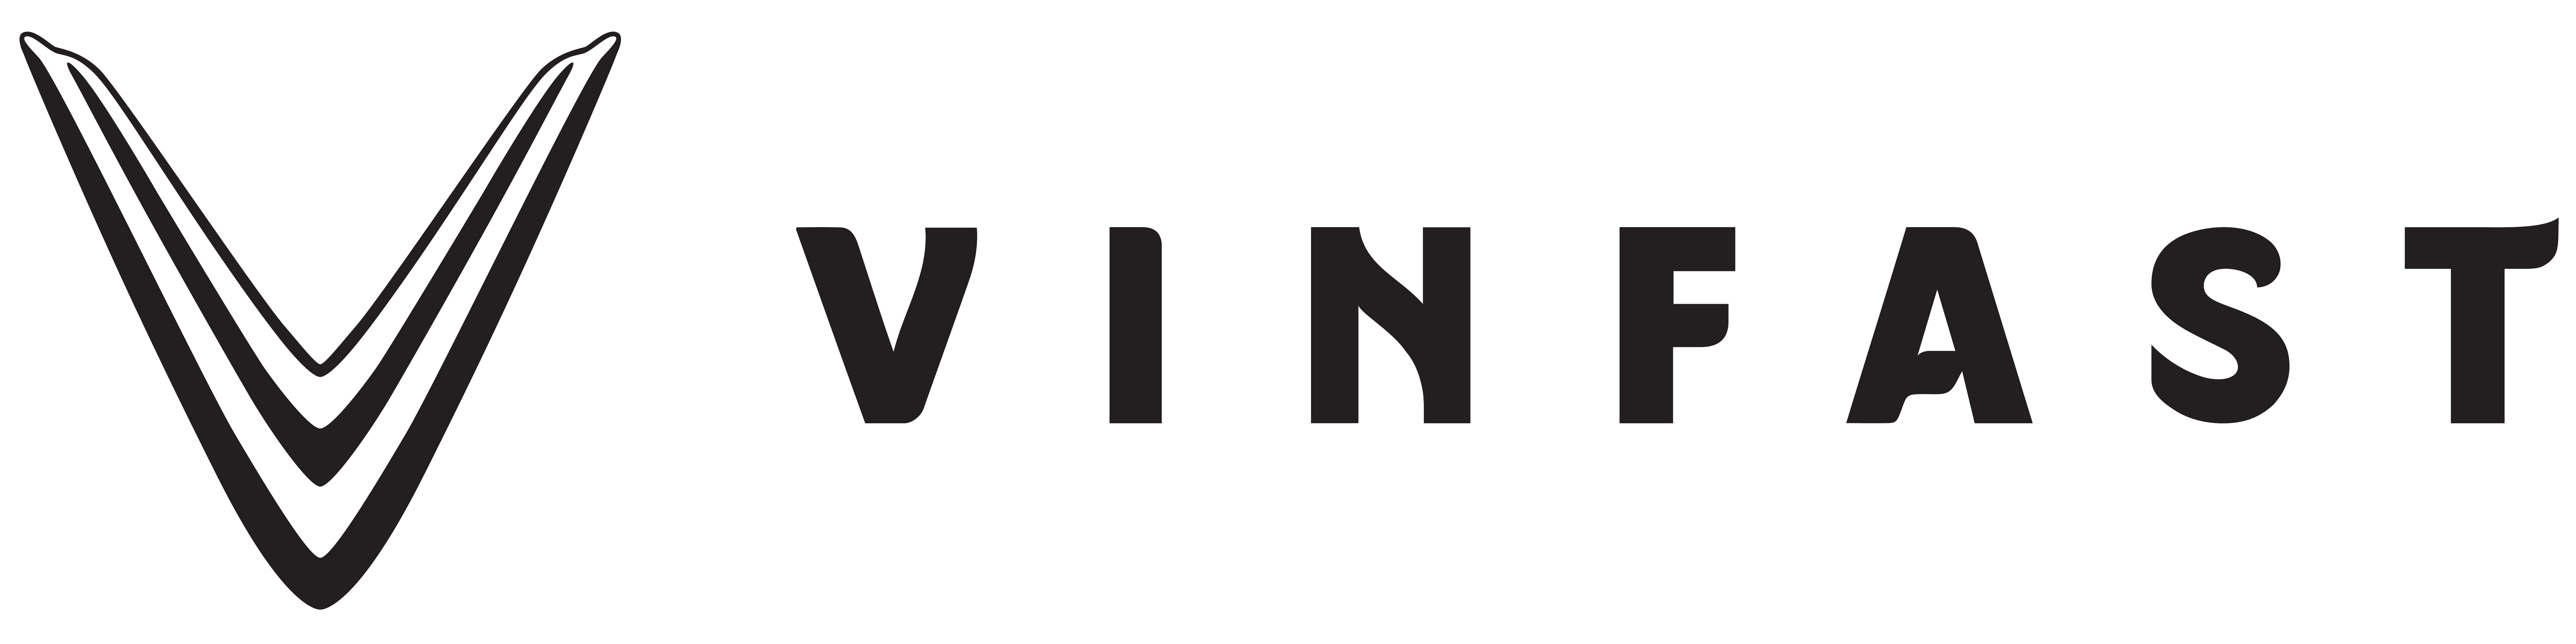 Vinfast-logo-new_NO_Tagline-2D-Horizontal-black.png